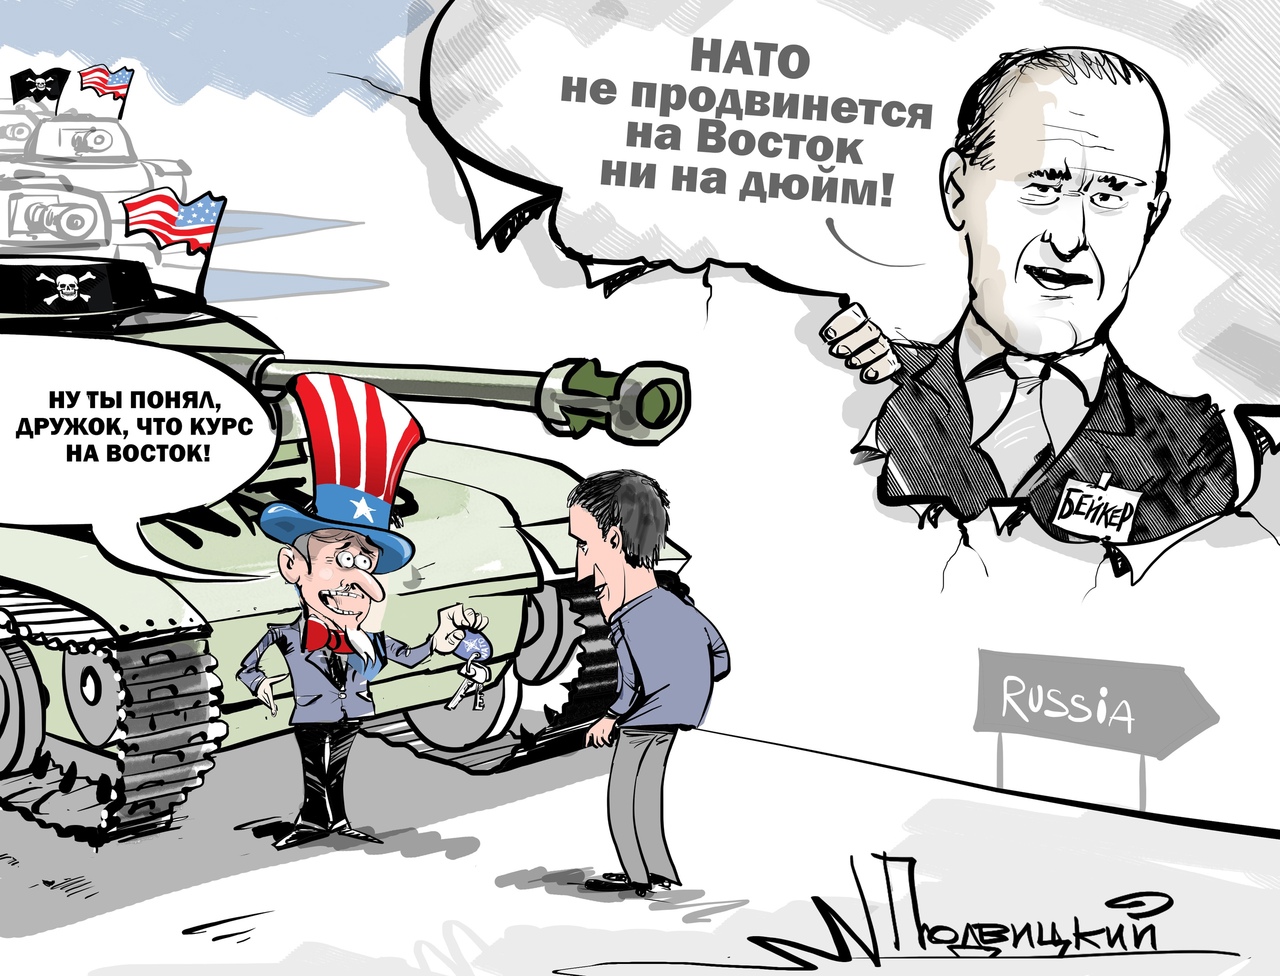 Хотят продвигать. НАТО карикатура. Расширение НАТО карикатура. Расширение НАТО на Восток карикатура. Русские идут карикатура.